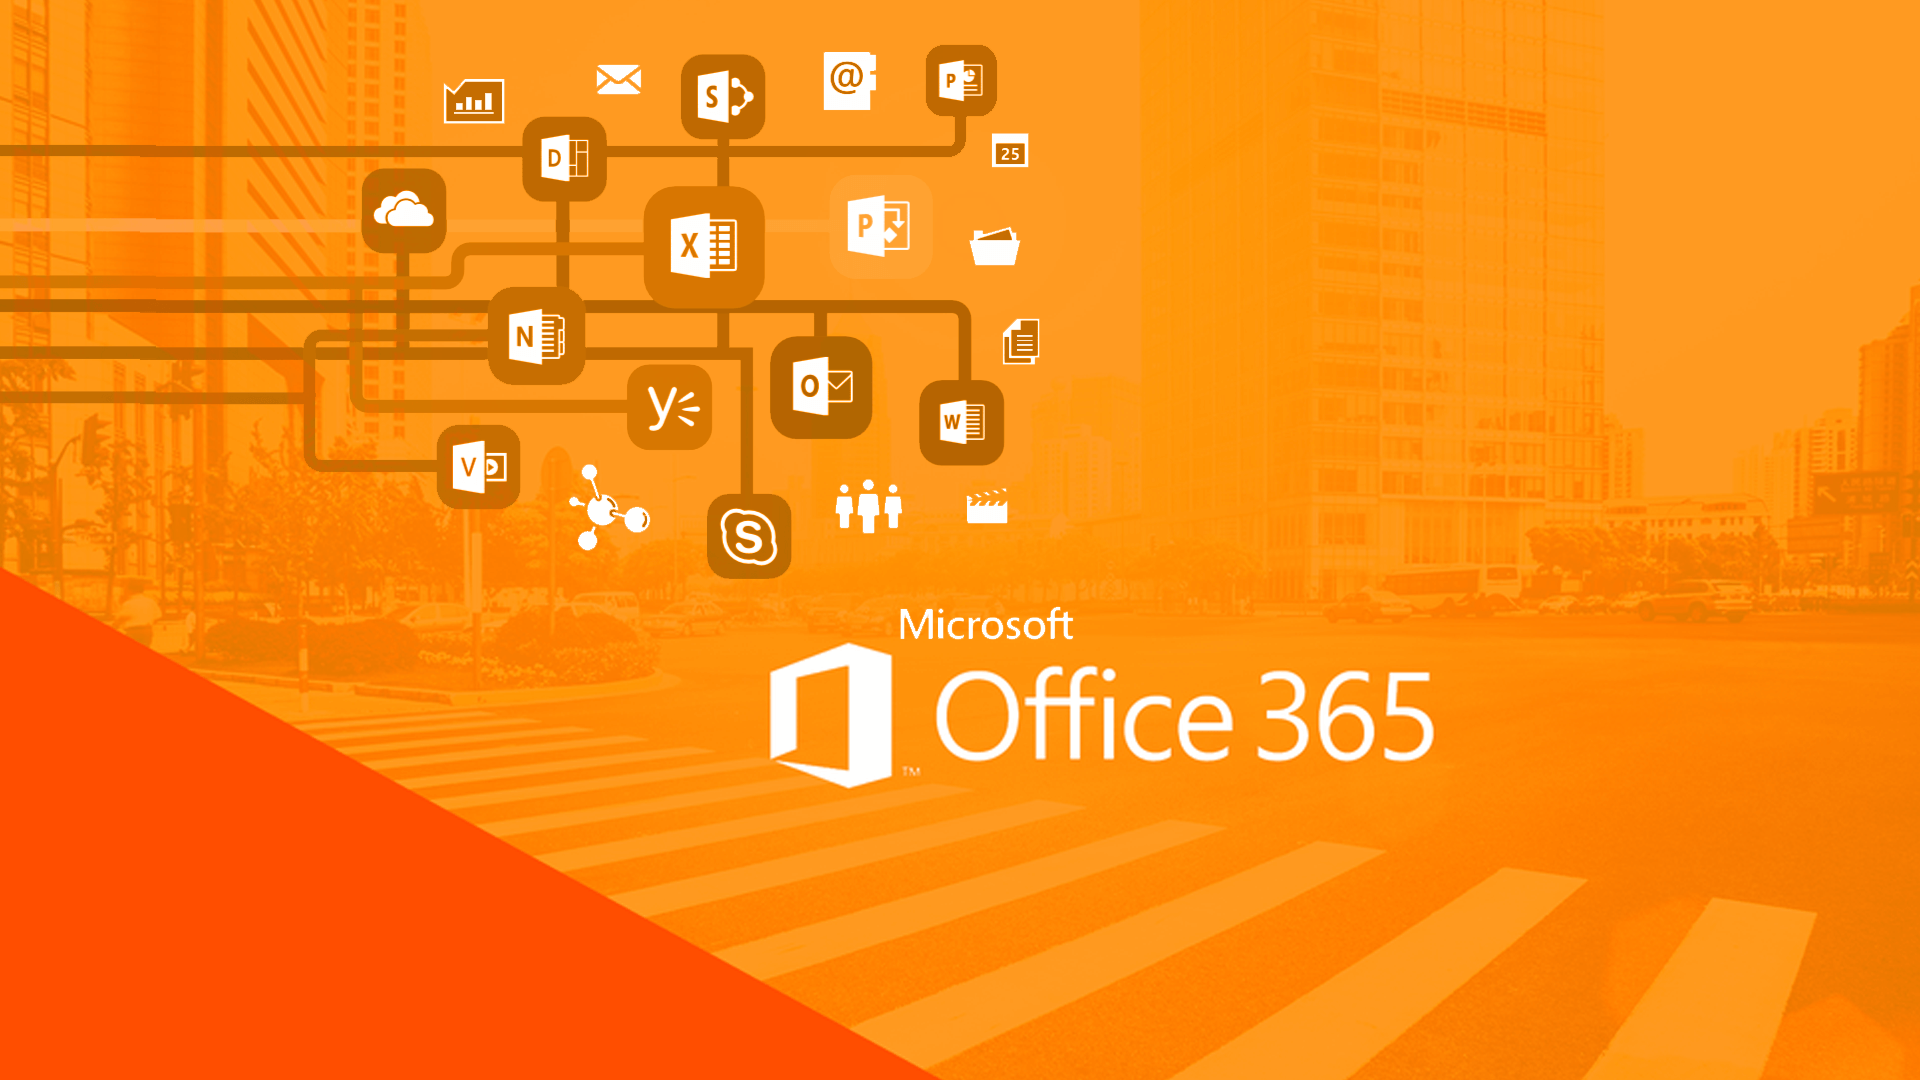 Microsoft download tool 365. Office 365. Microsoft Office 365. Office 365 последняя версия. Офис Microsoft.